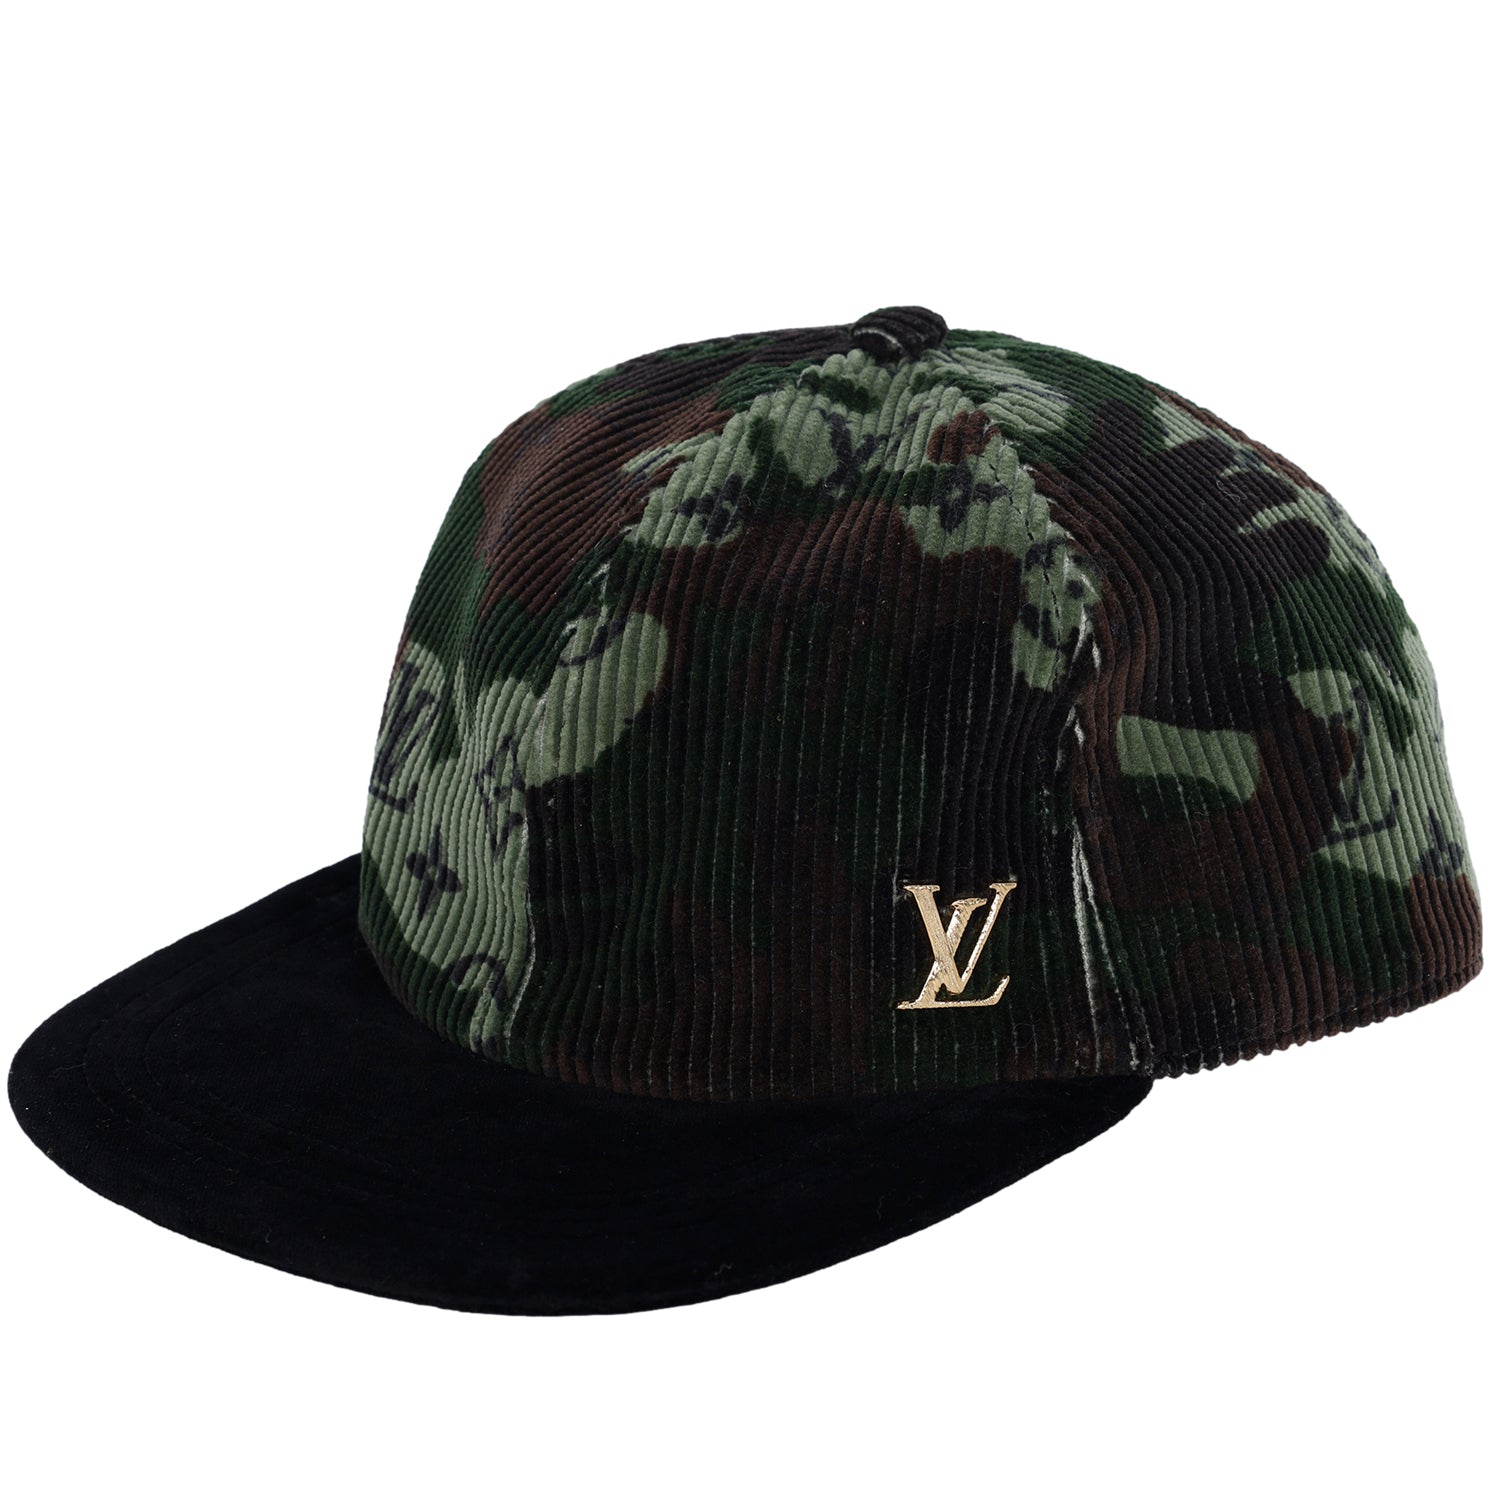 LV Corduroy Baseball Cap - Black